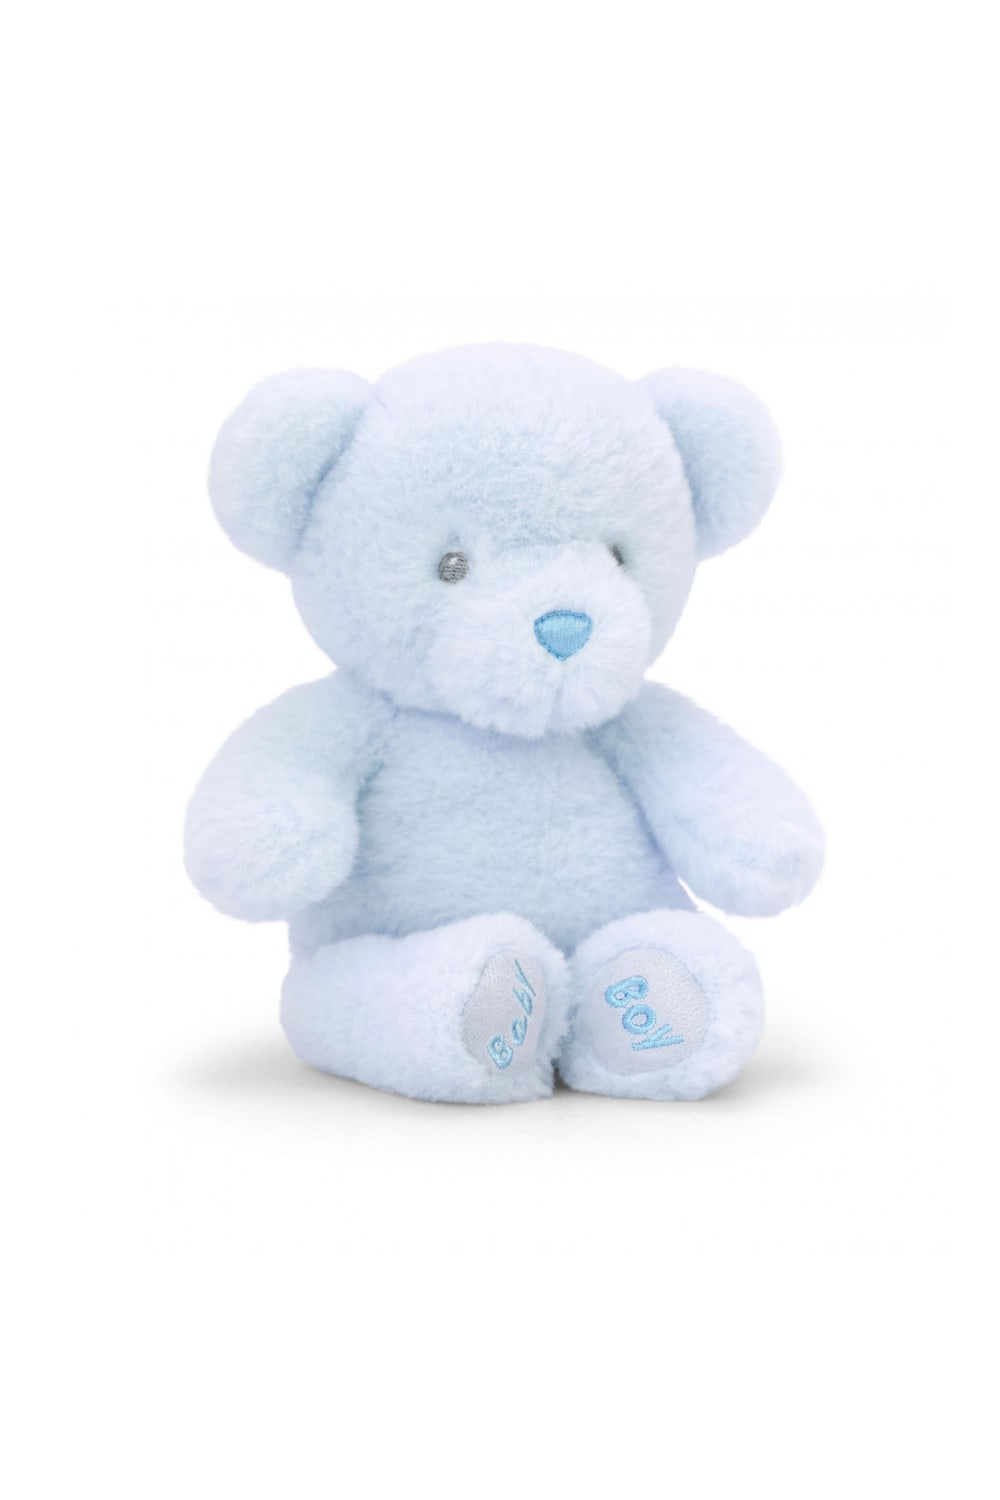 Keel Toys Baby Boys Bear Plush Toy (Blue) (25cm)